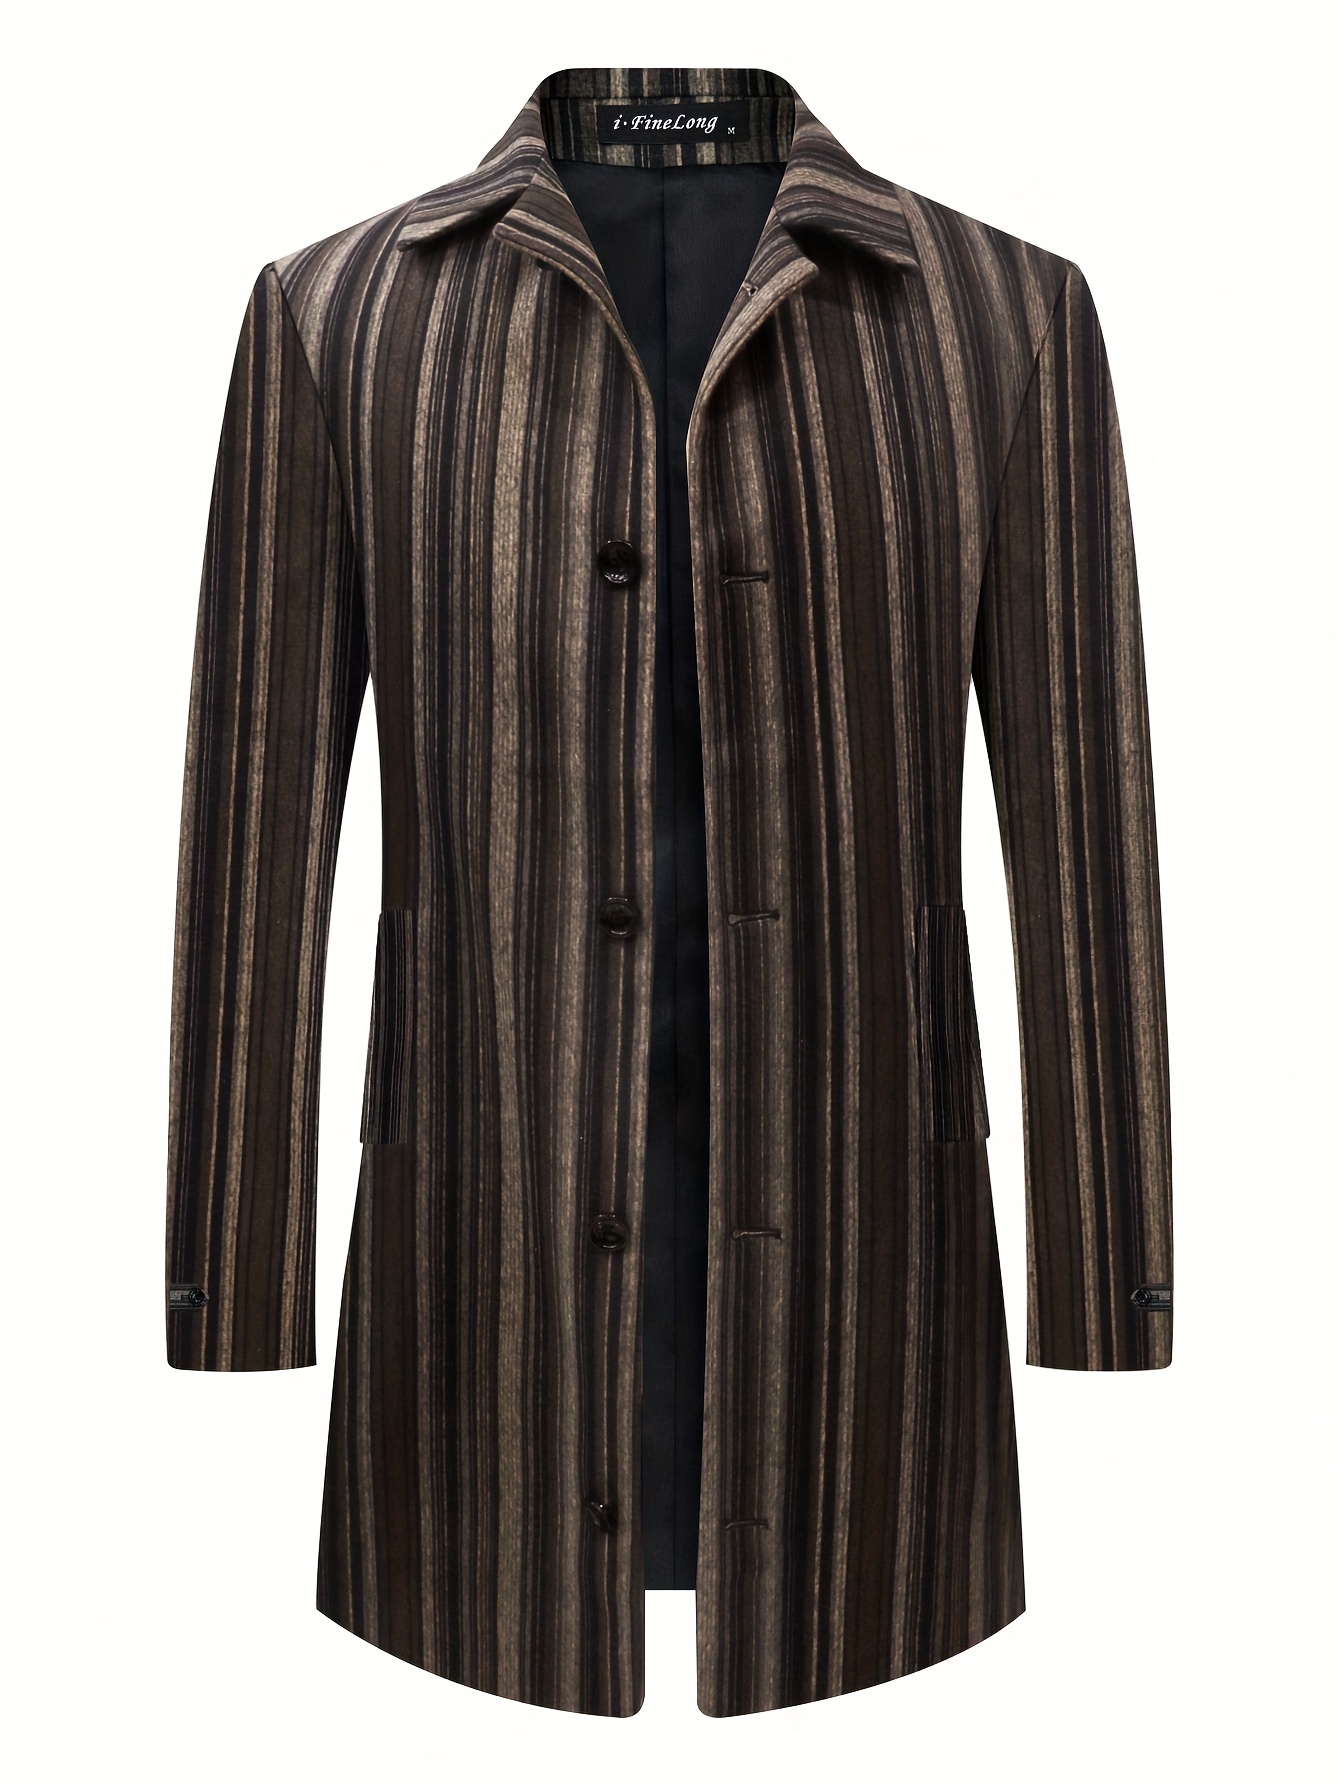 Gabardina para hombre de un solo pecho de longitud media, abrigo de manga  larga para invierno, abrigos elegantes para hombres